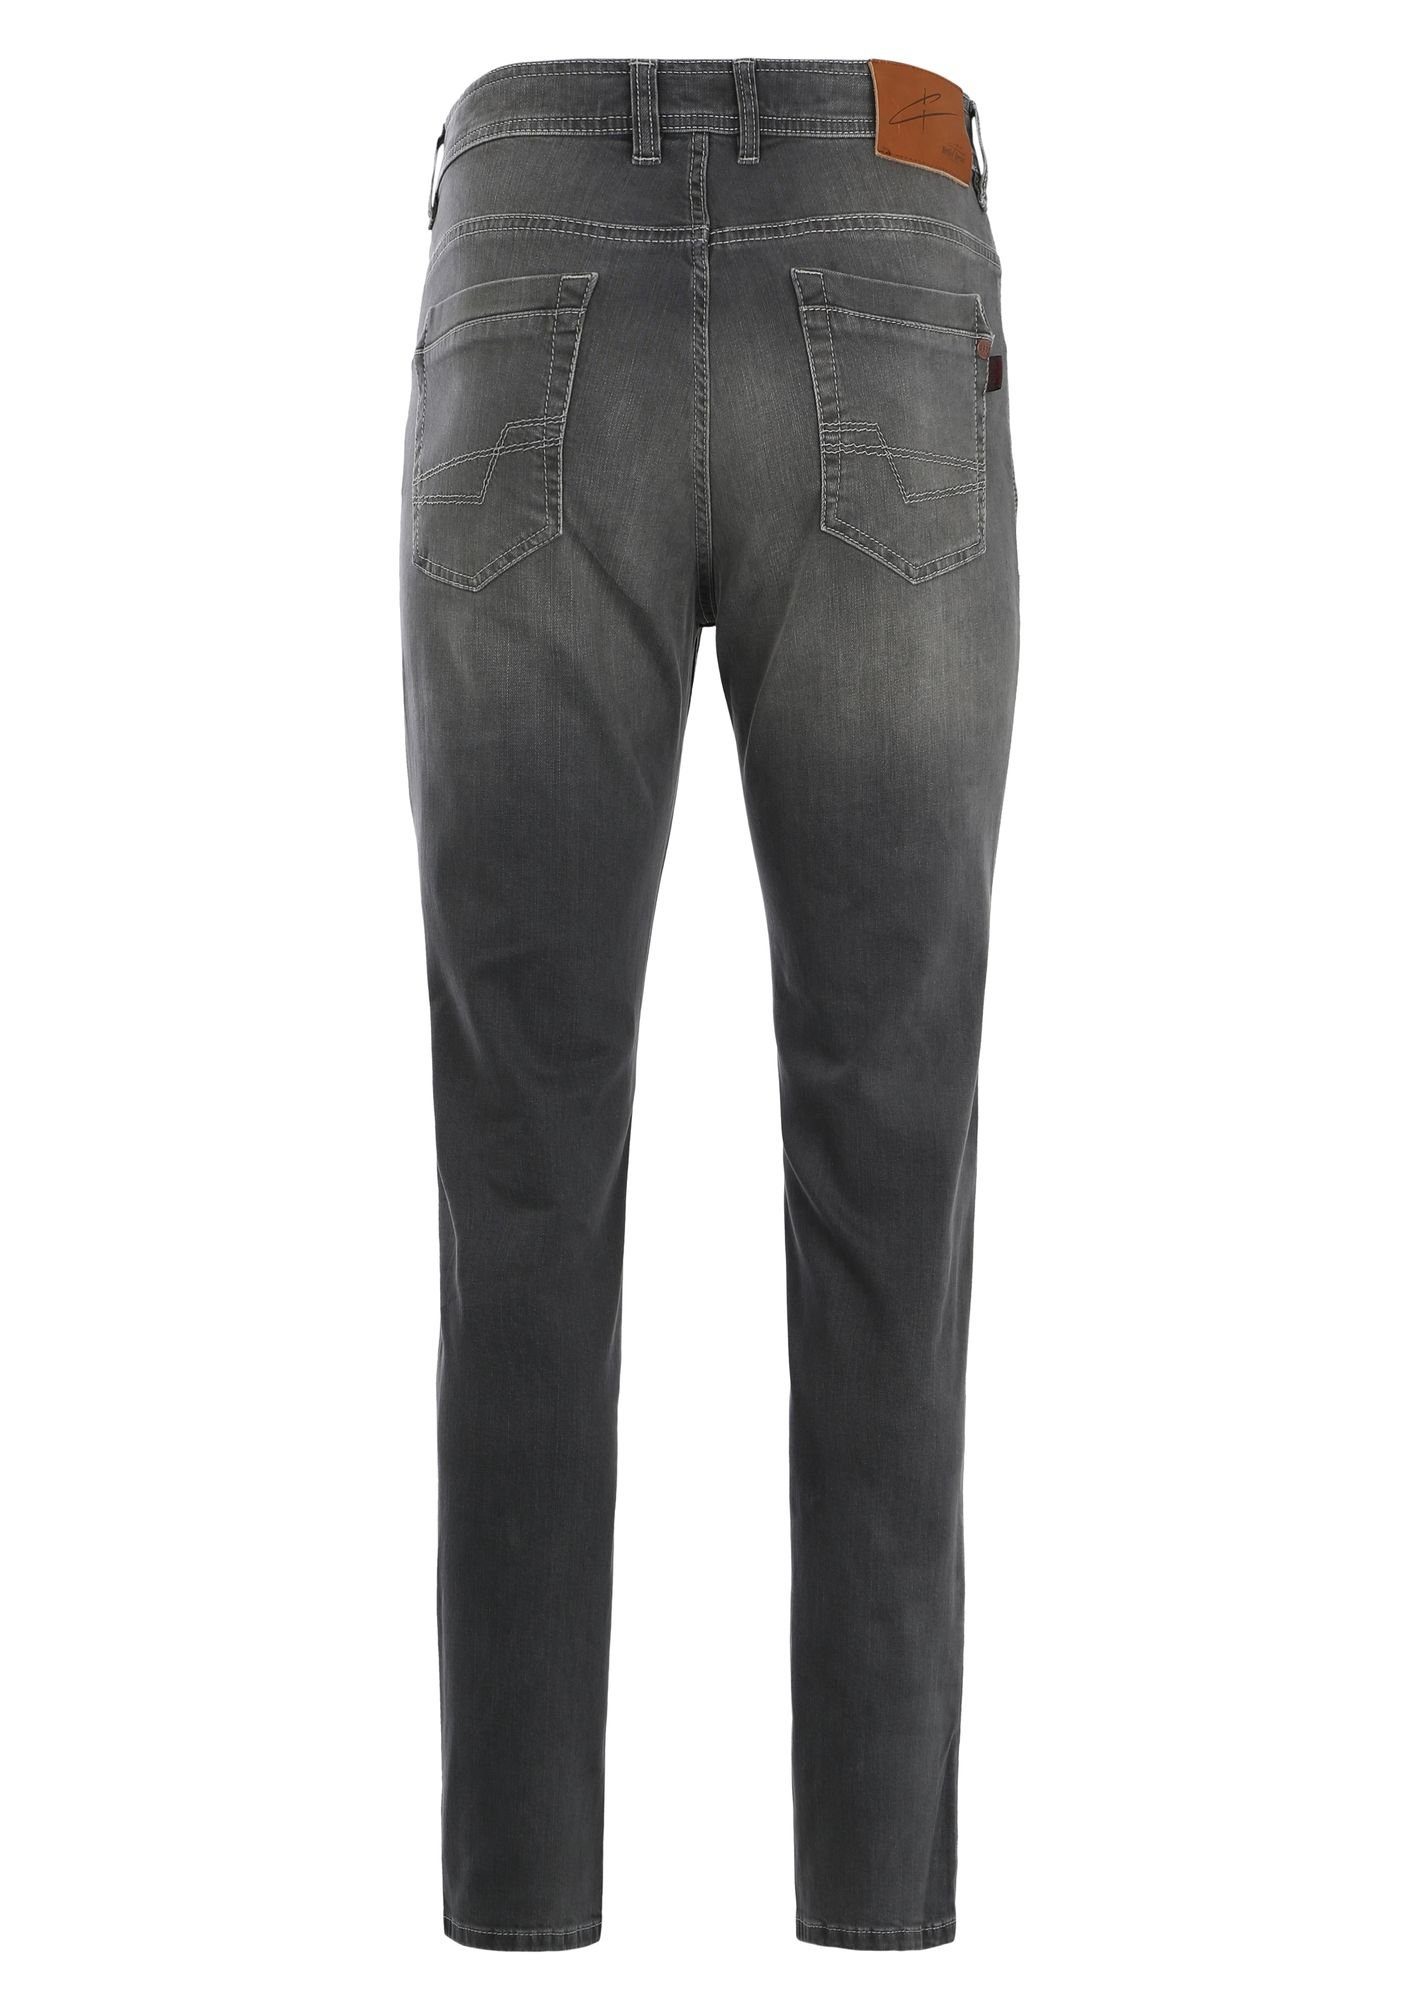 Toronto Brühl 2 5-Pocket-Jeans grauused